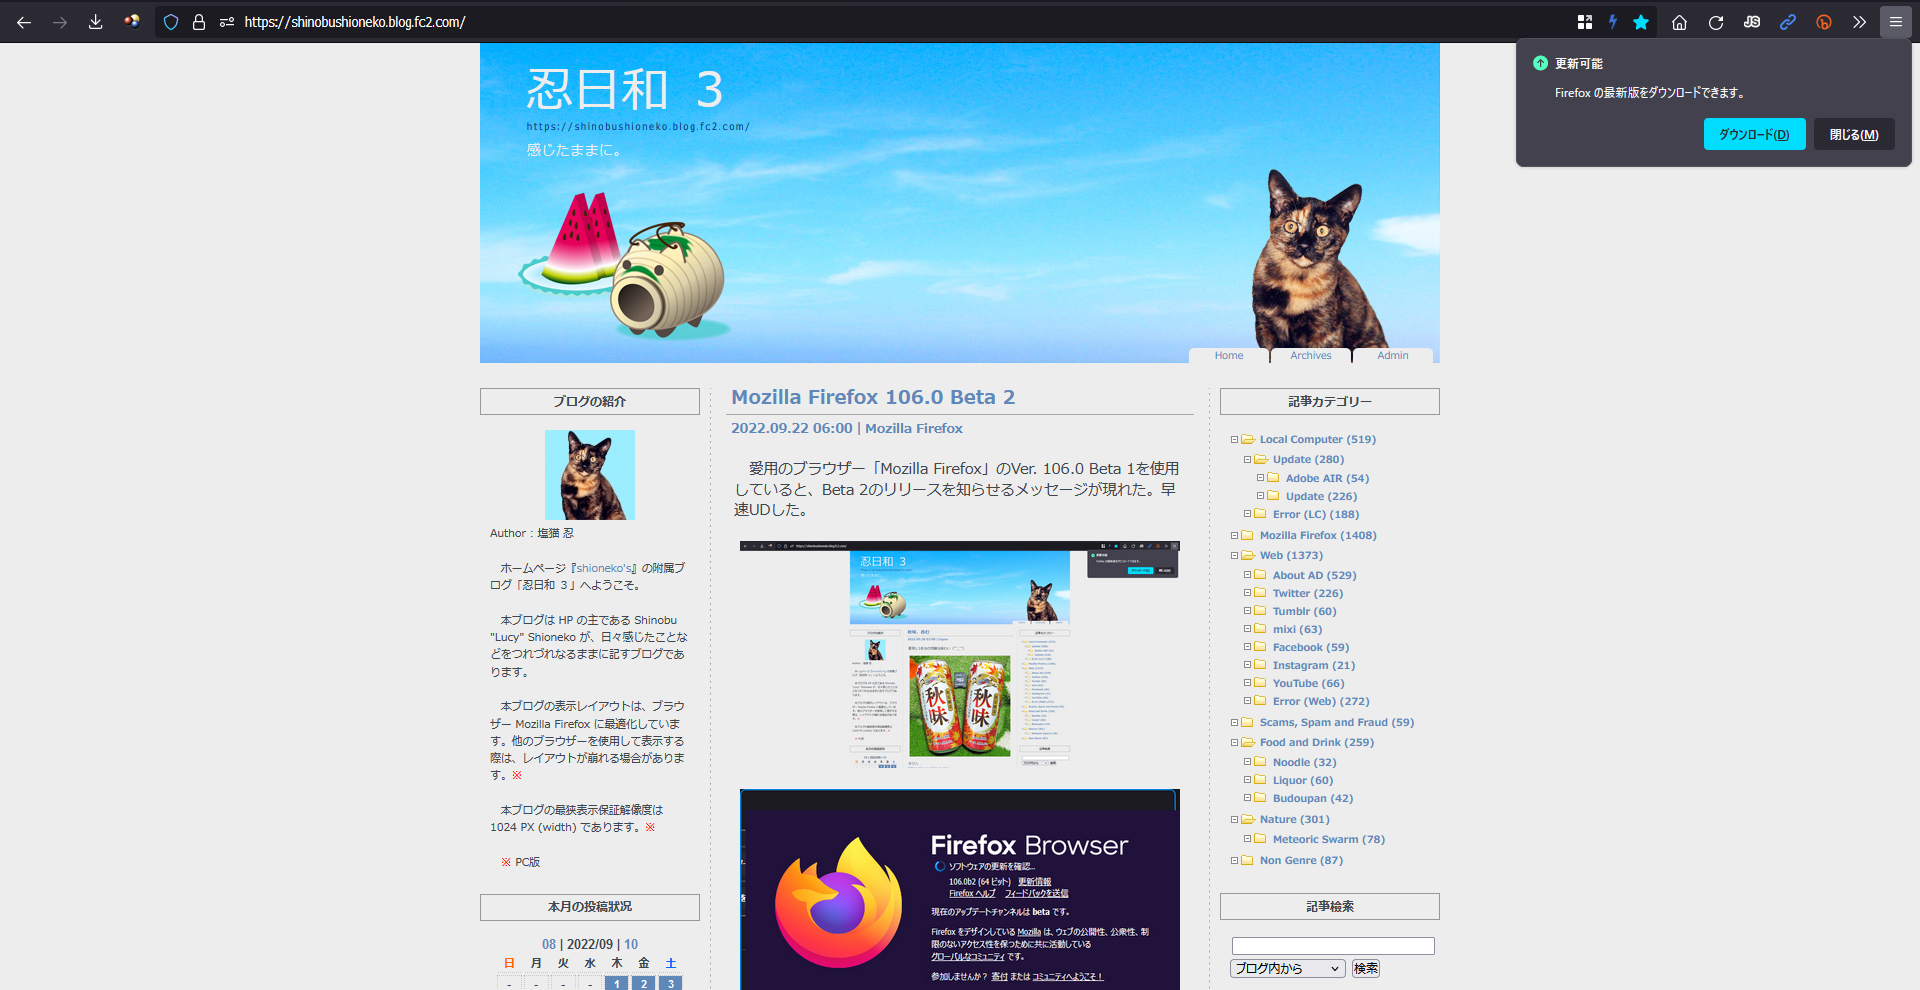 Mozilla Firefox 106.0 Beta 3